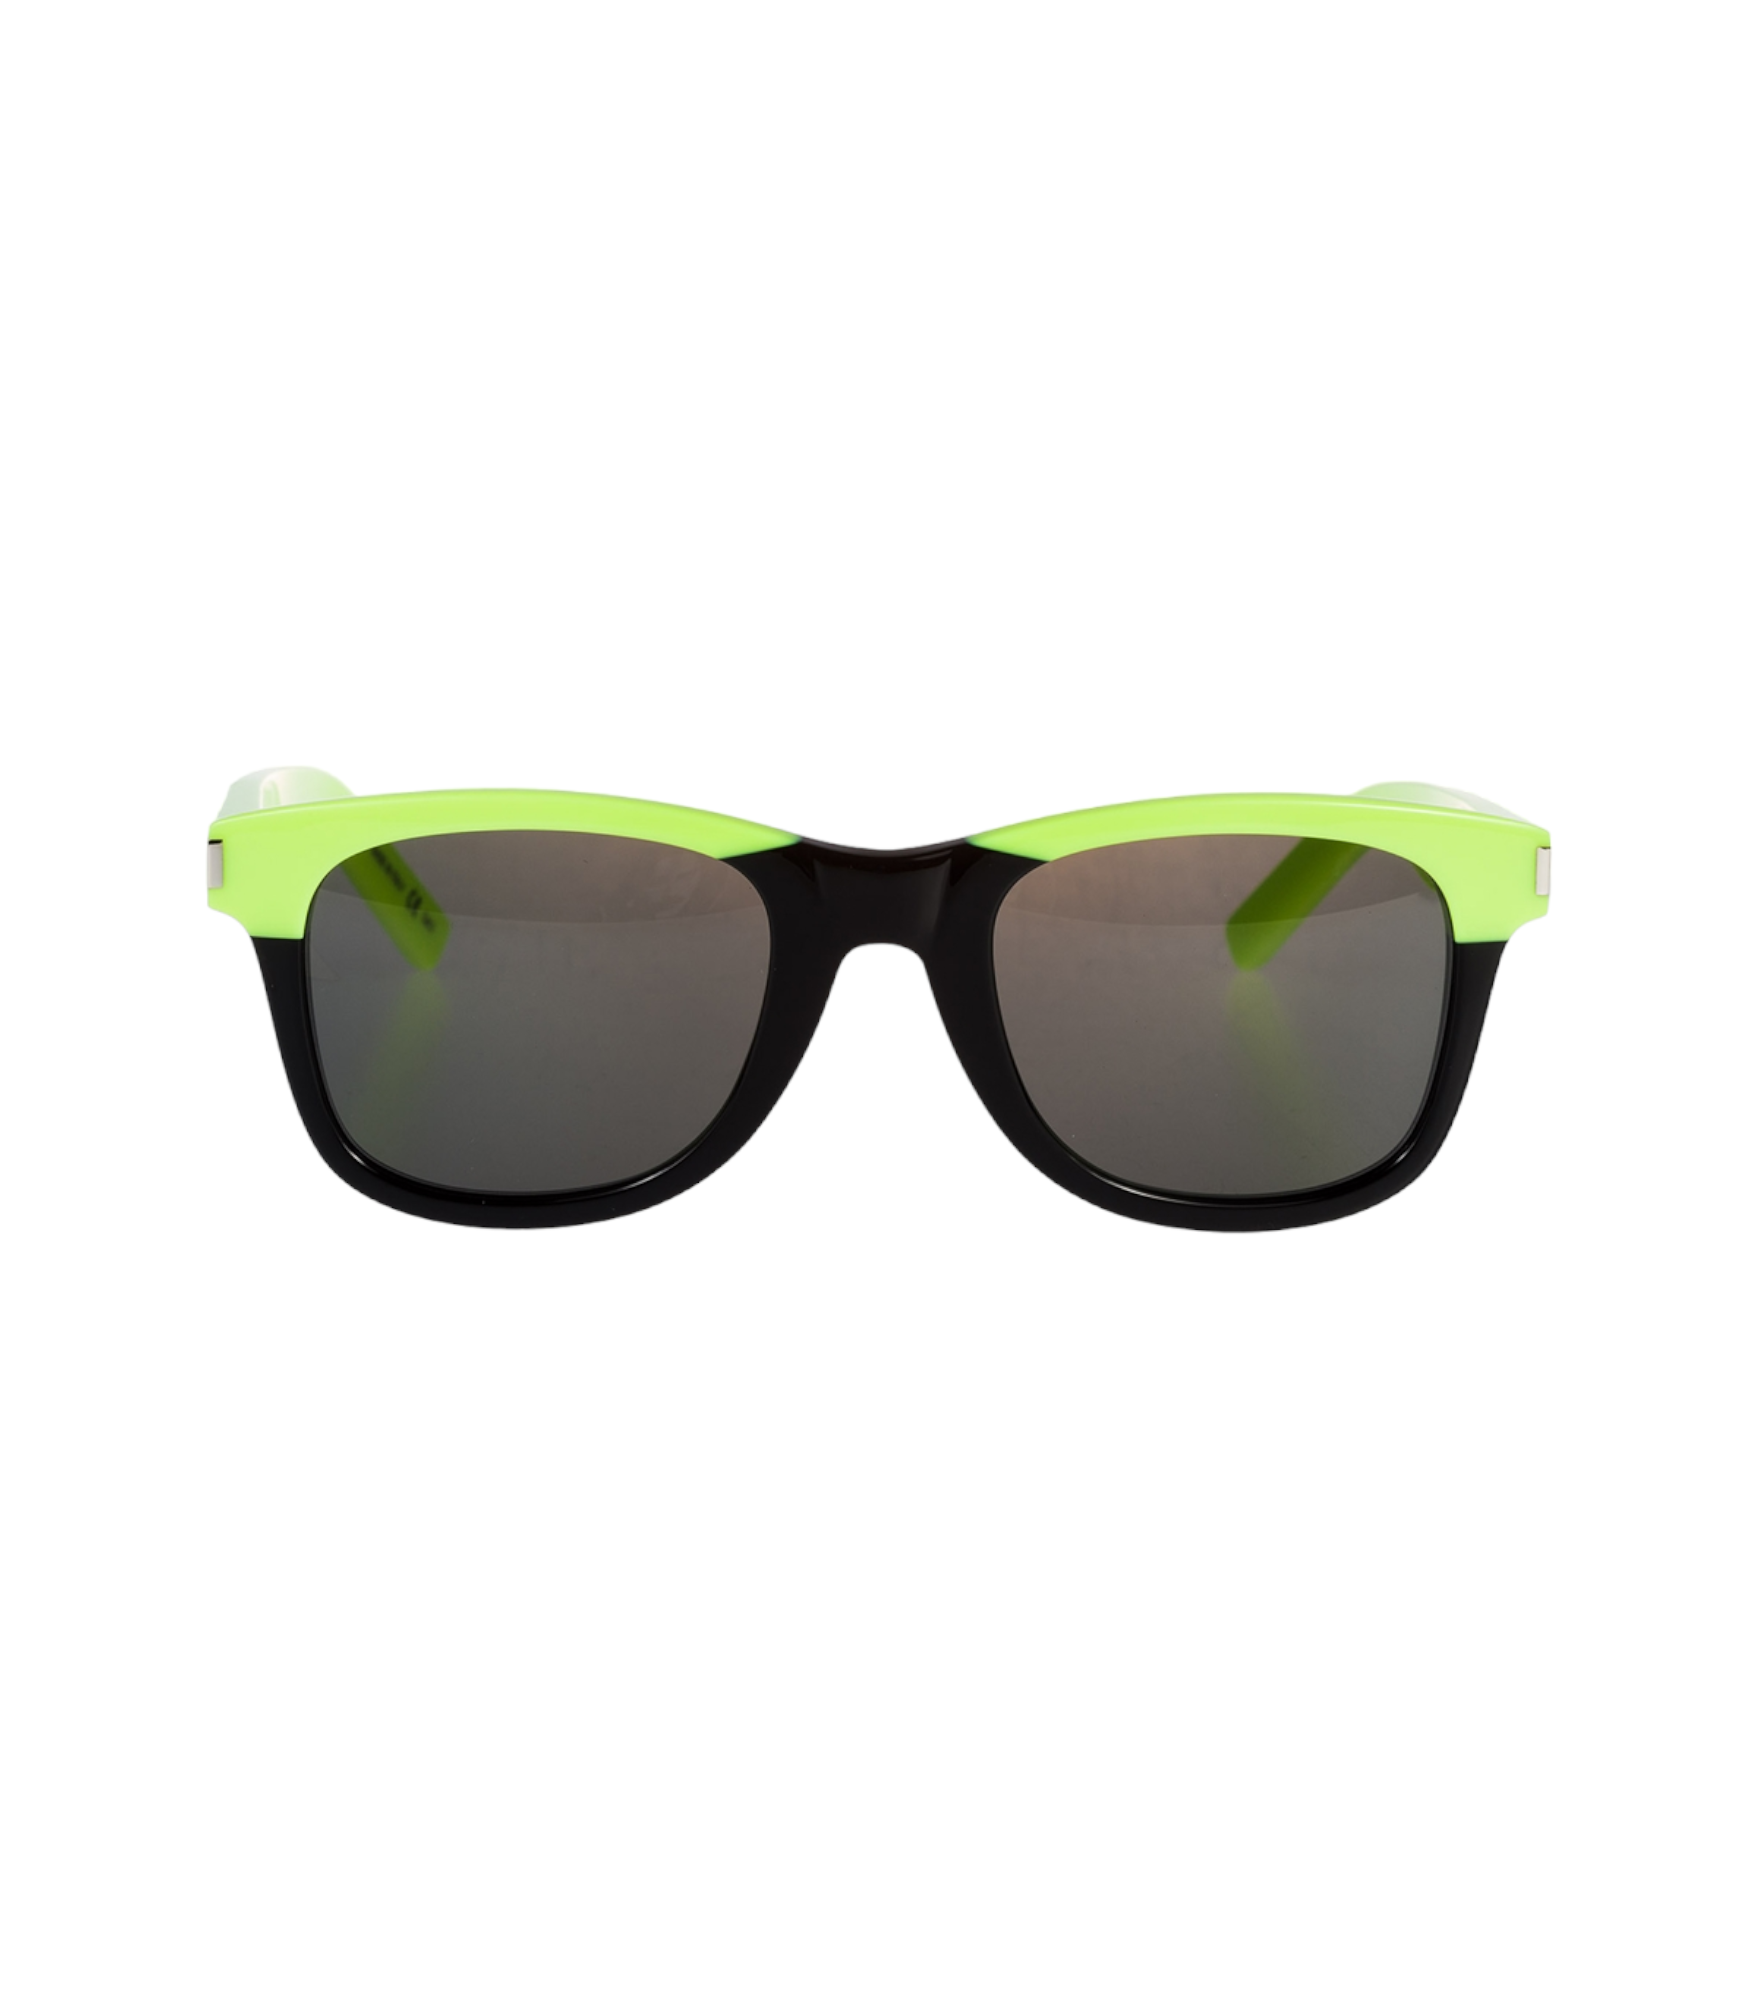 Saint Laurent Classic SL 51 Black/Neon Sunglasses